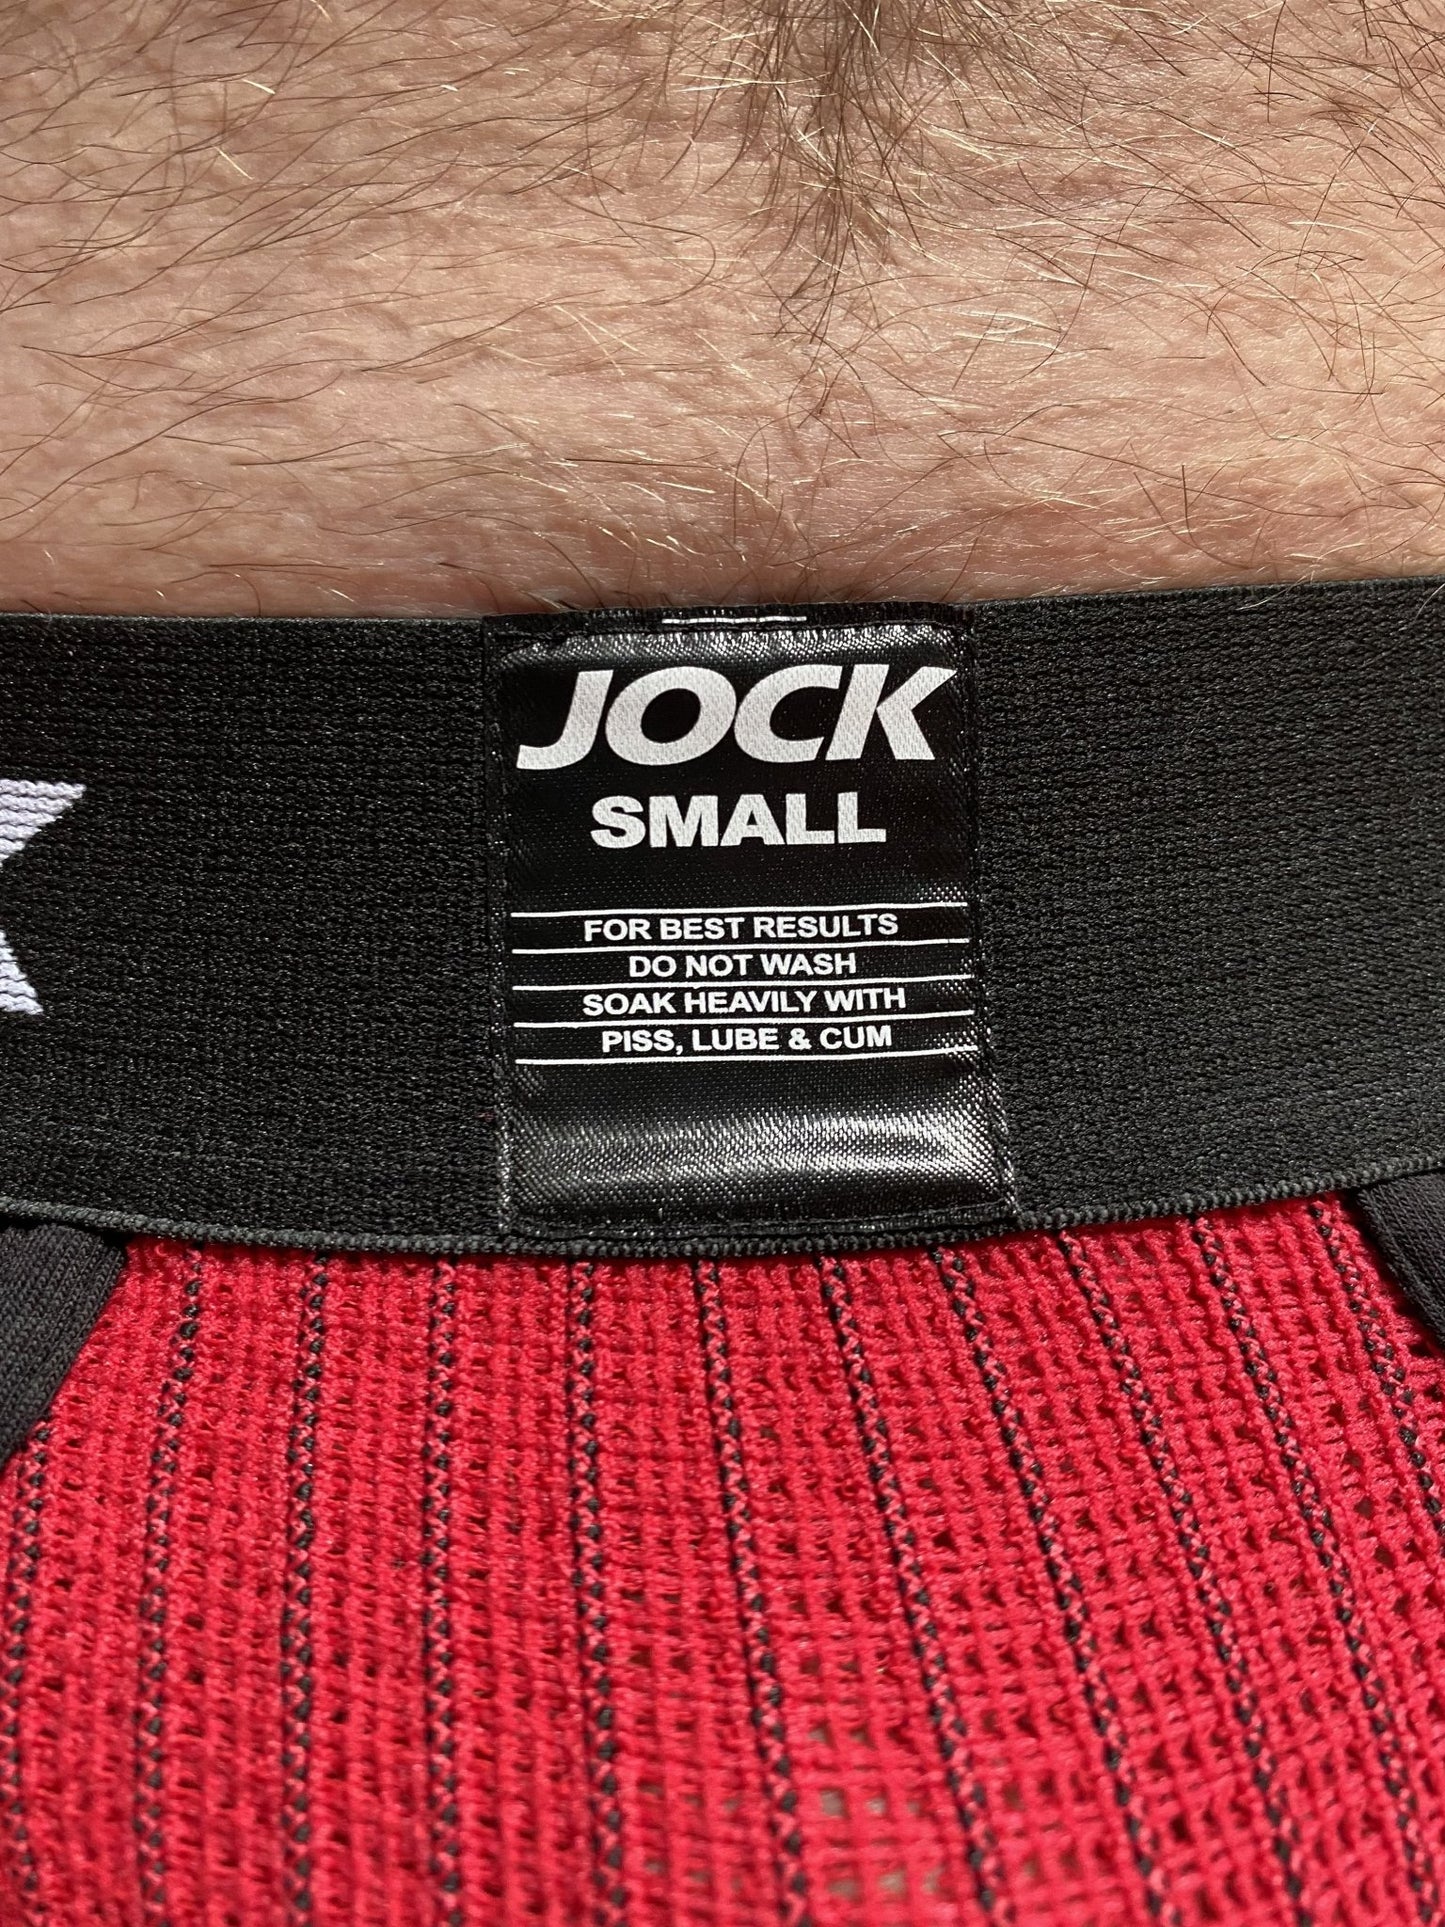 JOCK Jock-Pouch Brief - Jockstraps.com